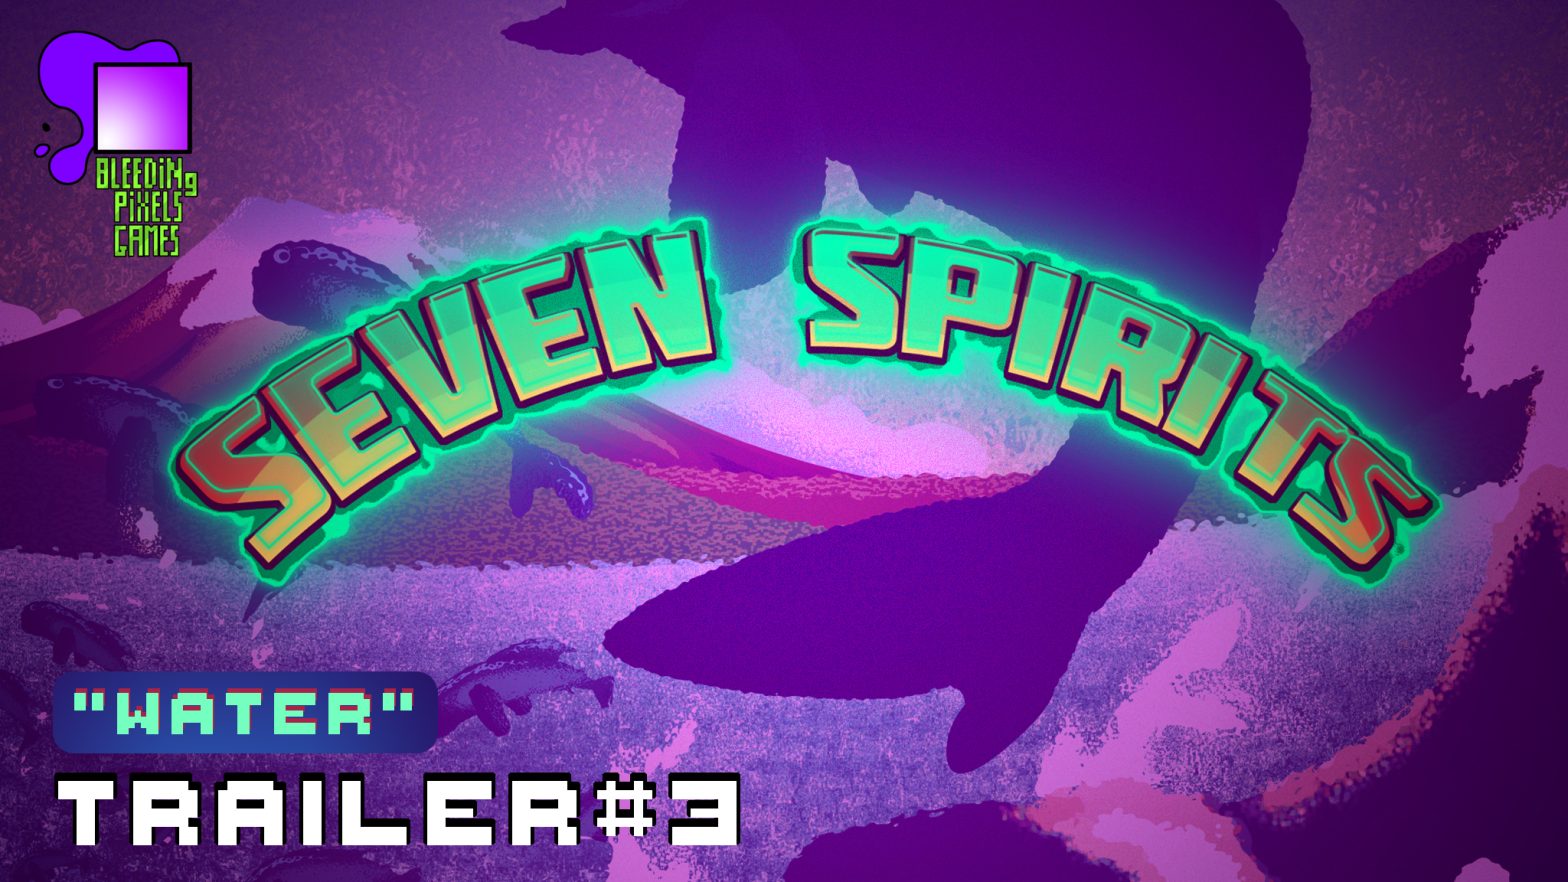 Seven Spirits – Trailer #3 “Water”